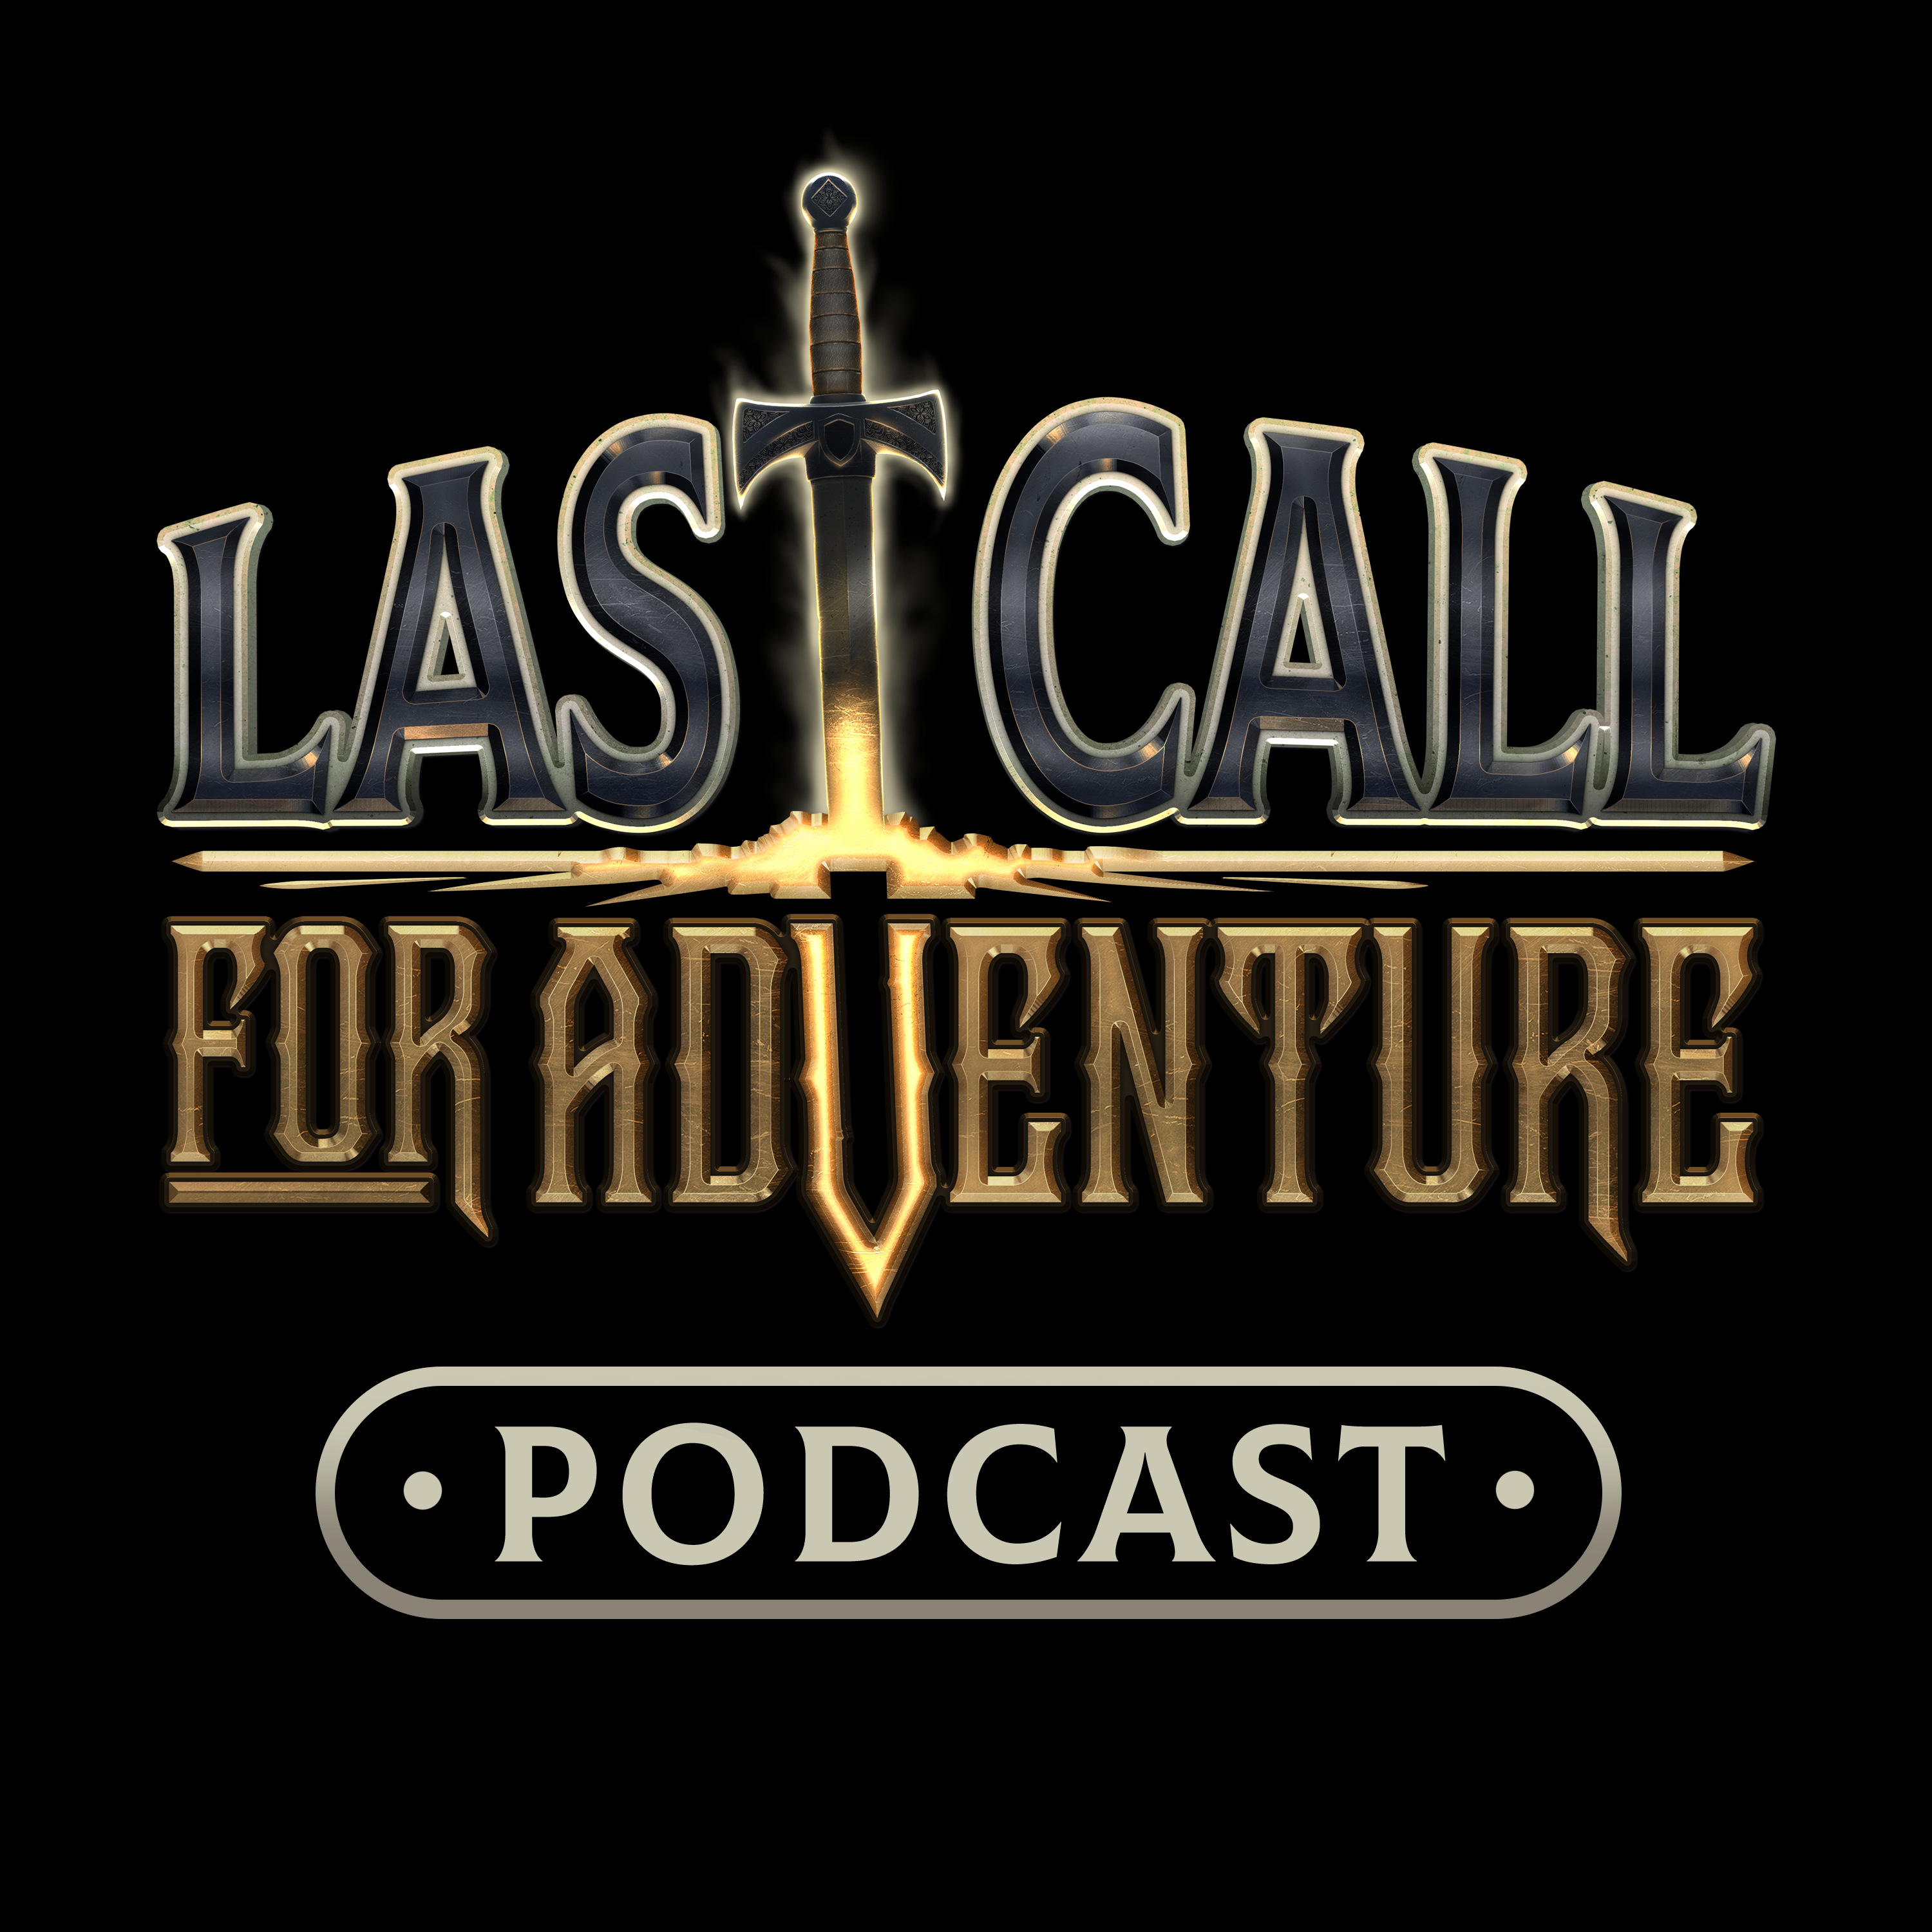 Last Call For Adventure